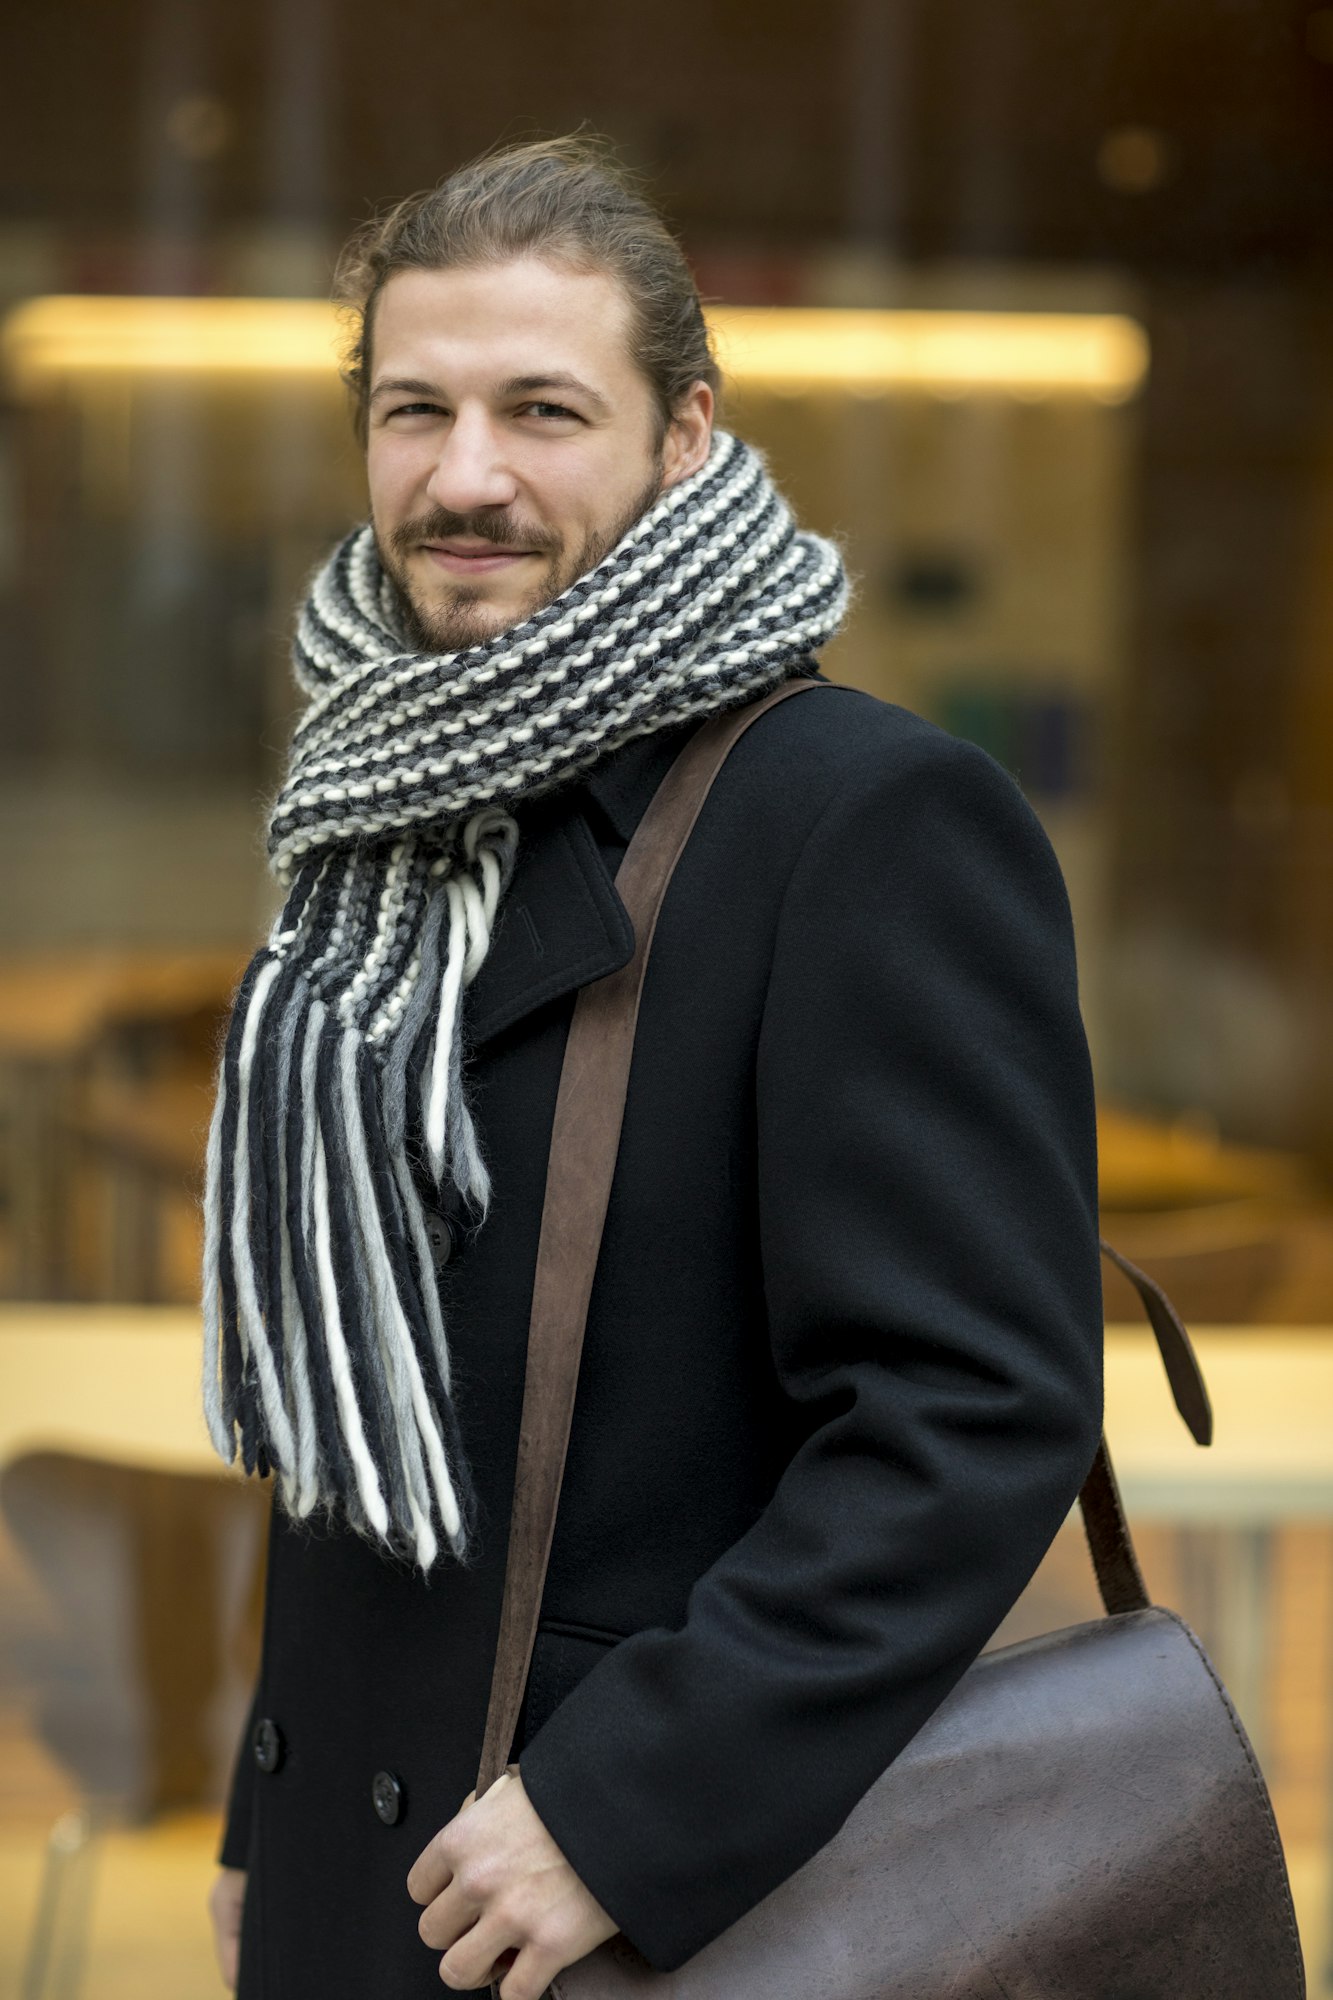 Portrait of man wearing scarf in autumn